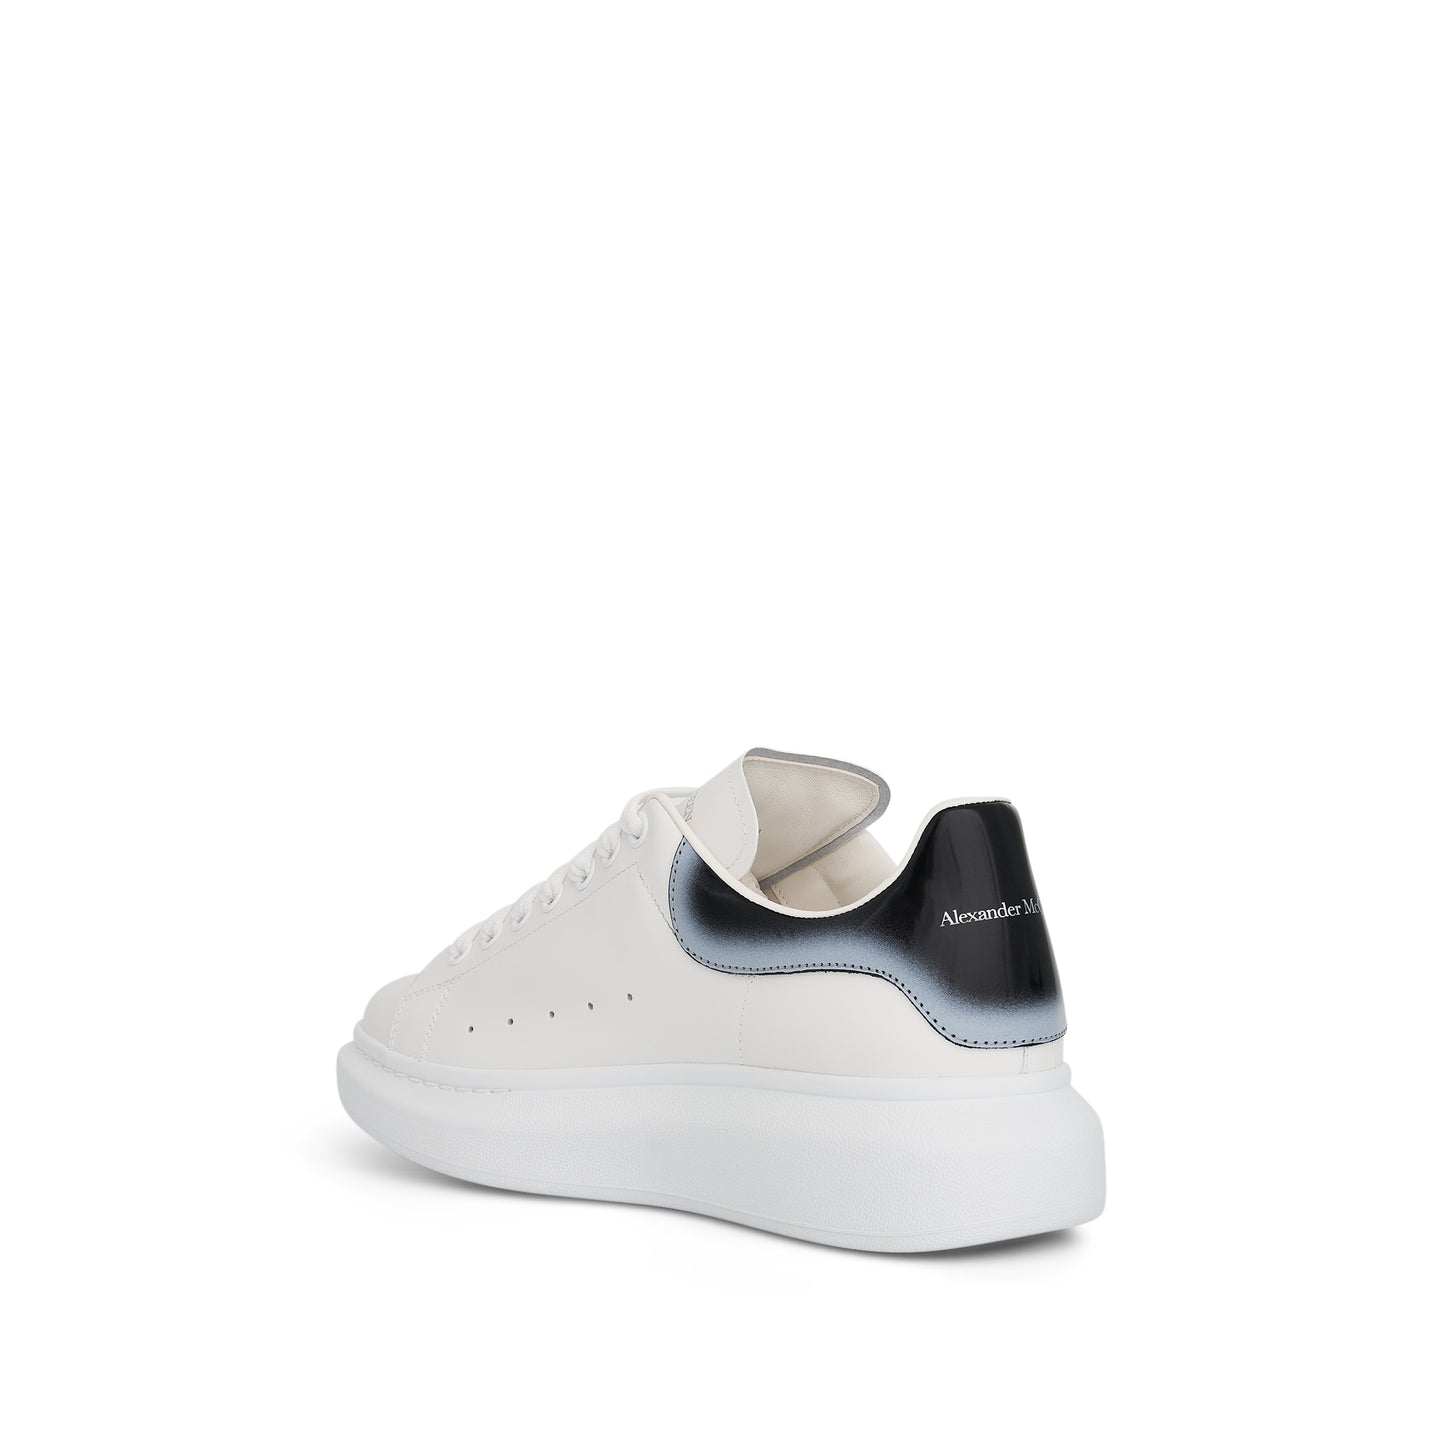 Larry Layered Heel Sneaker in White/Black/Silver